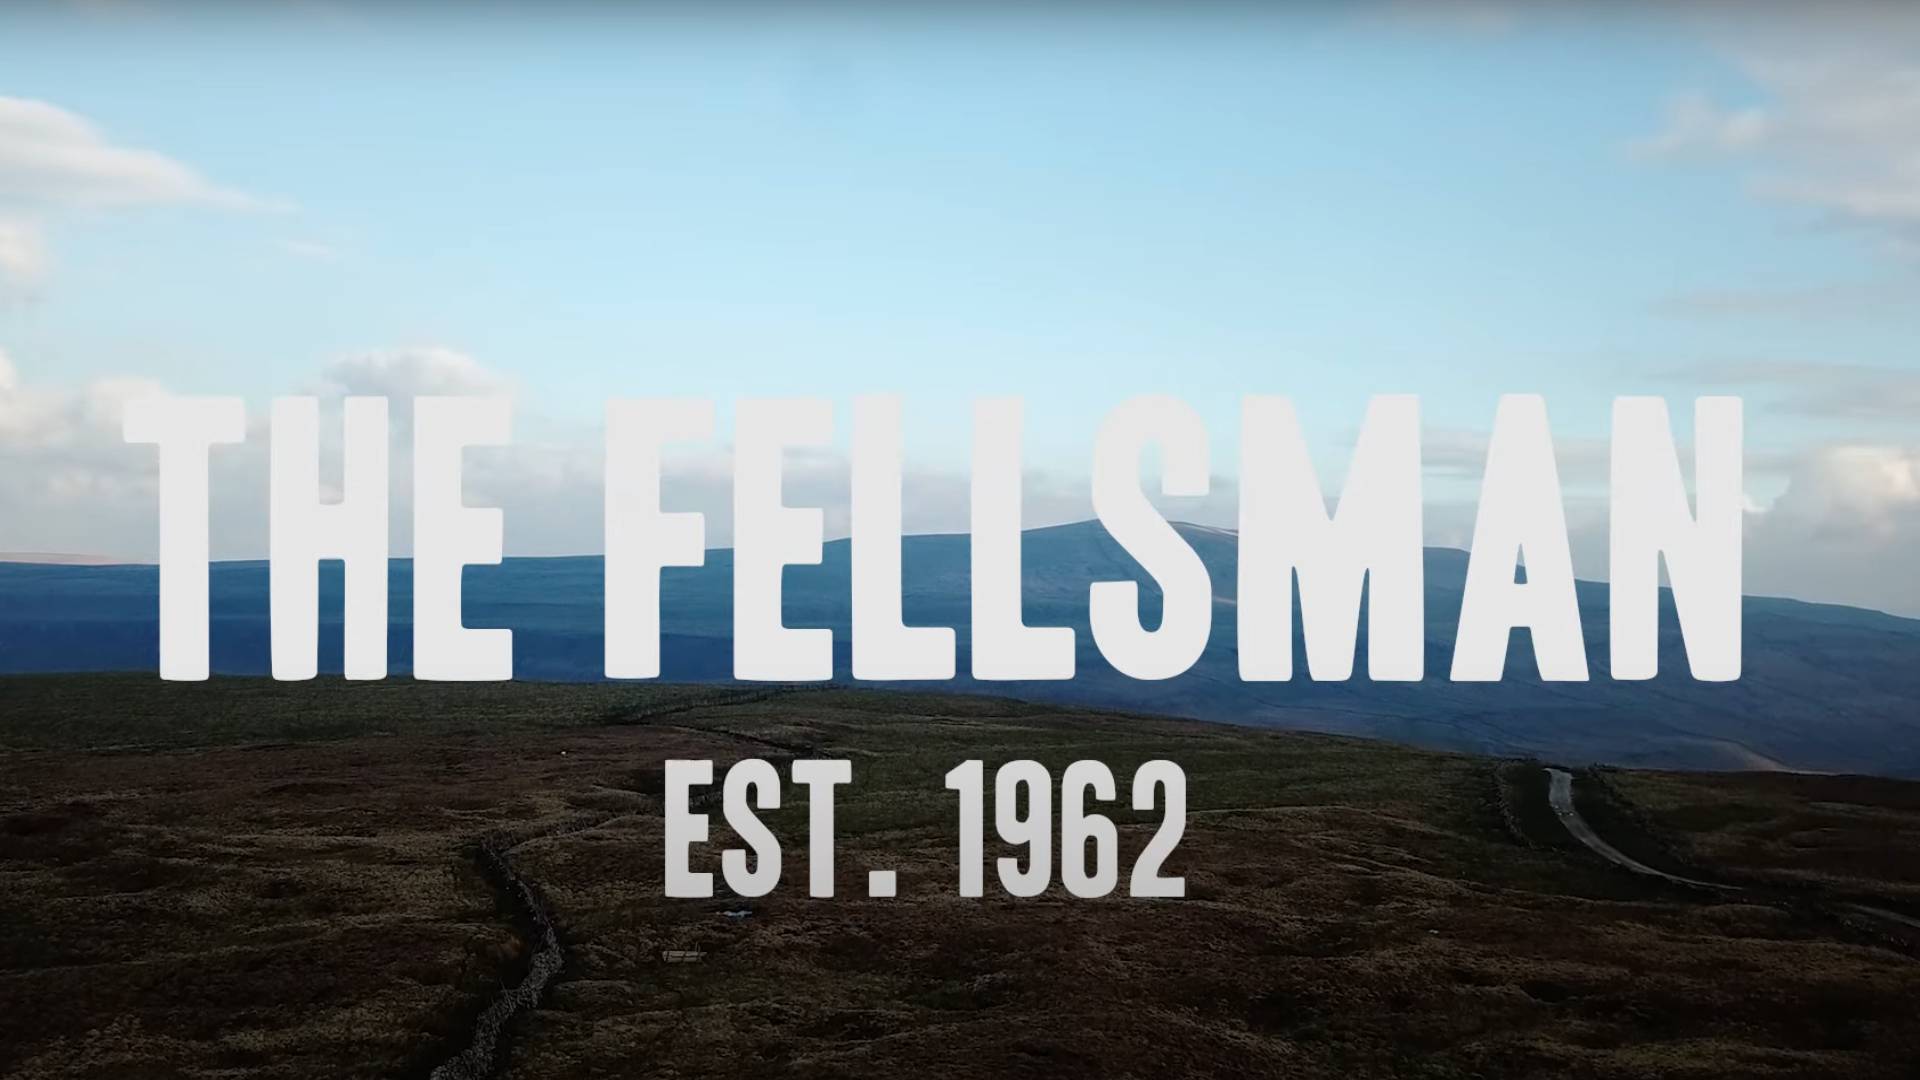 The 60th Fellsman Awaits – Entries now open!